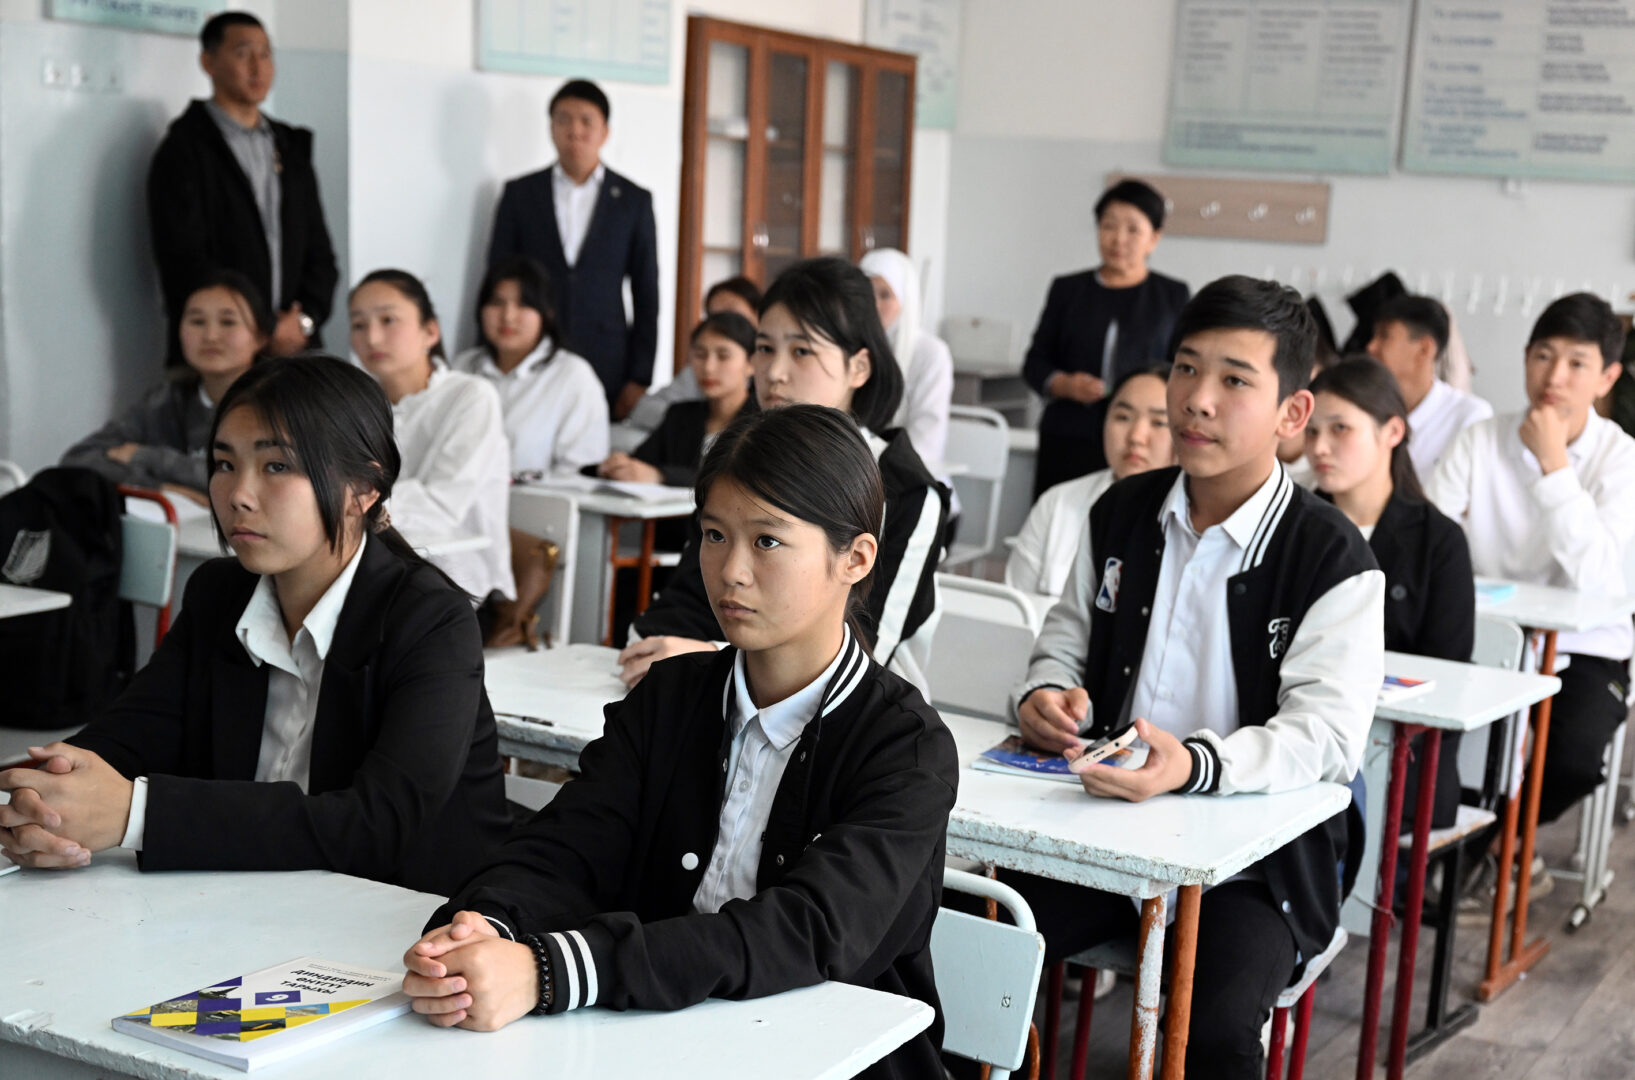 DOS 3789 Президент внепланово посетил одну из школ Бишкека и посидел на уроке - фото